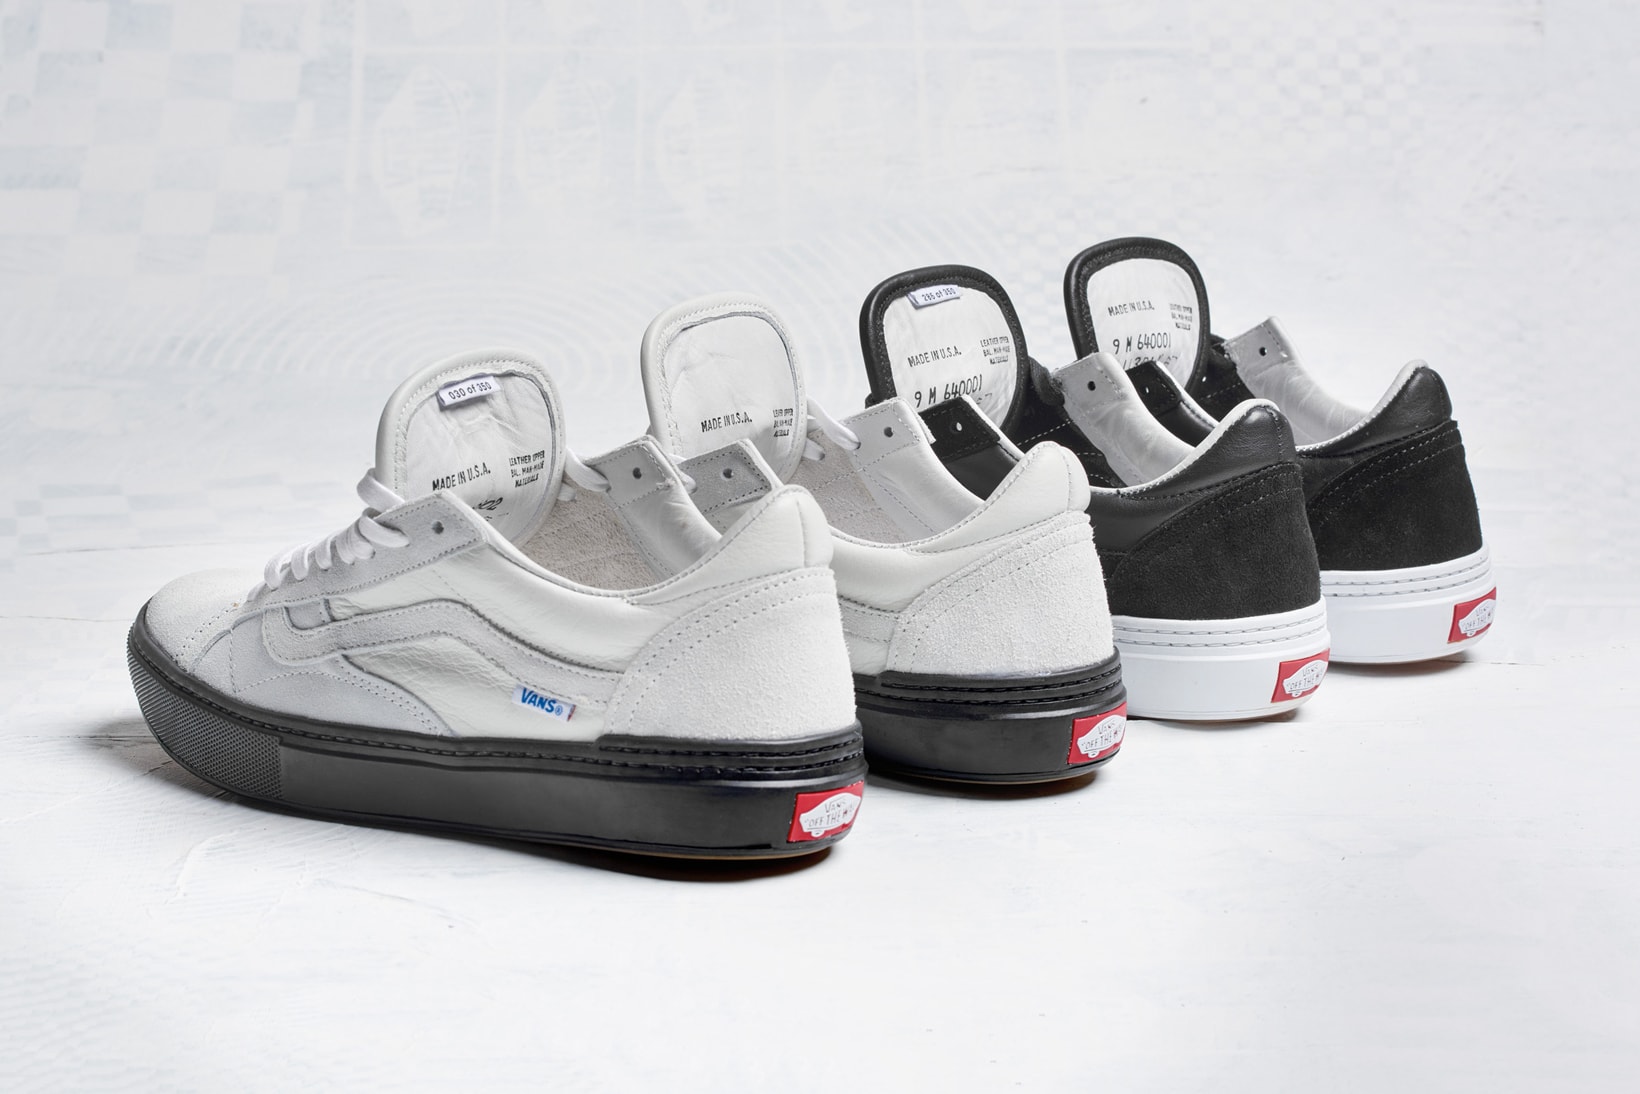 Vans Pro Skate Style 113 Pro USA ArcAd Footwear Sneakers Shoes Skateboarding Low-Top